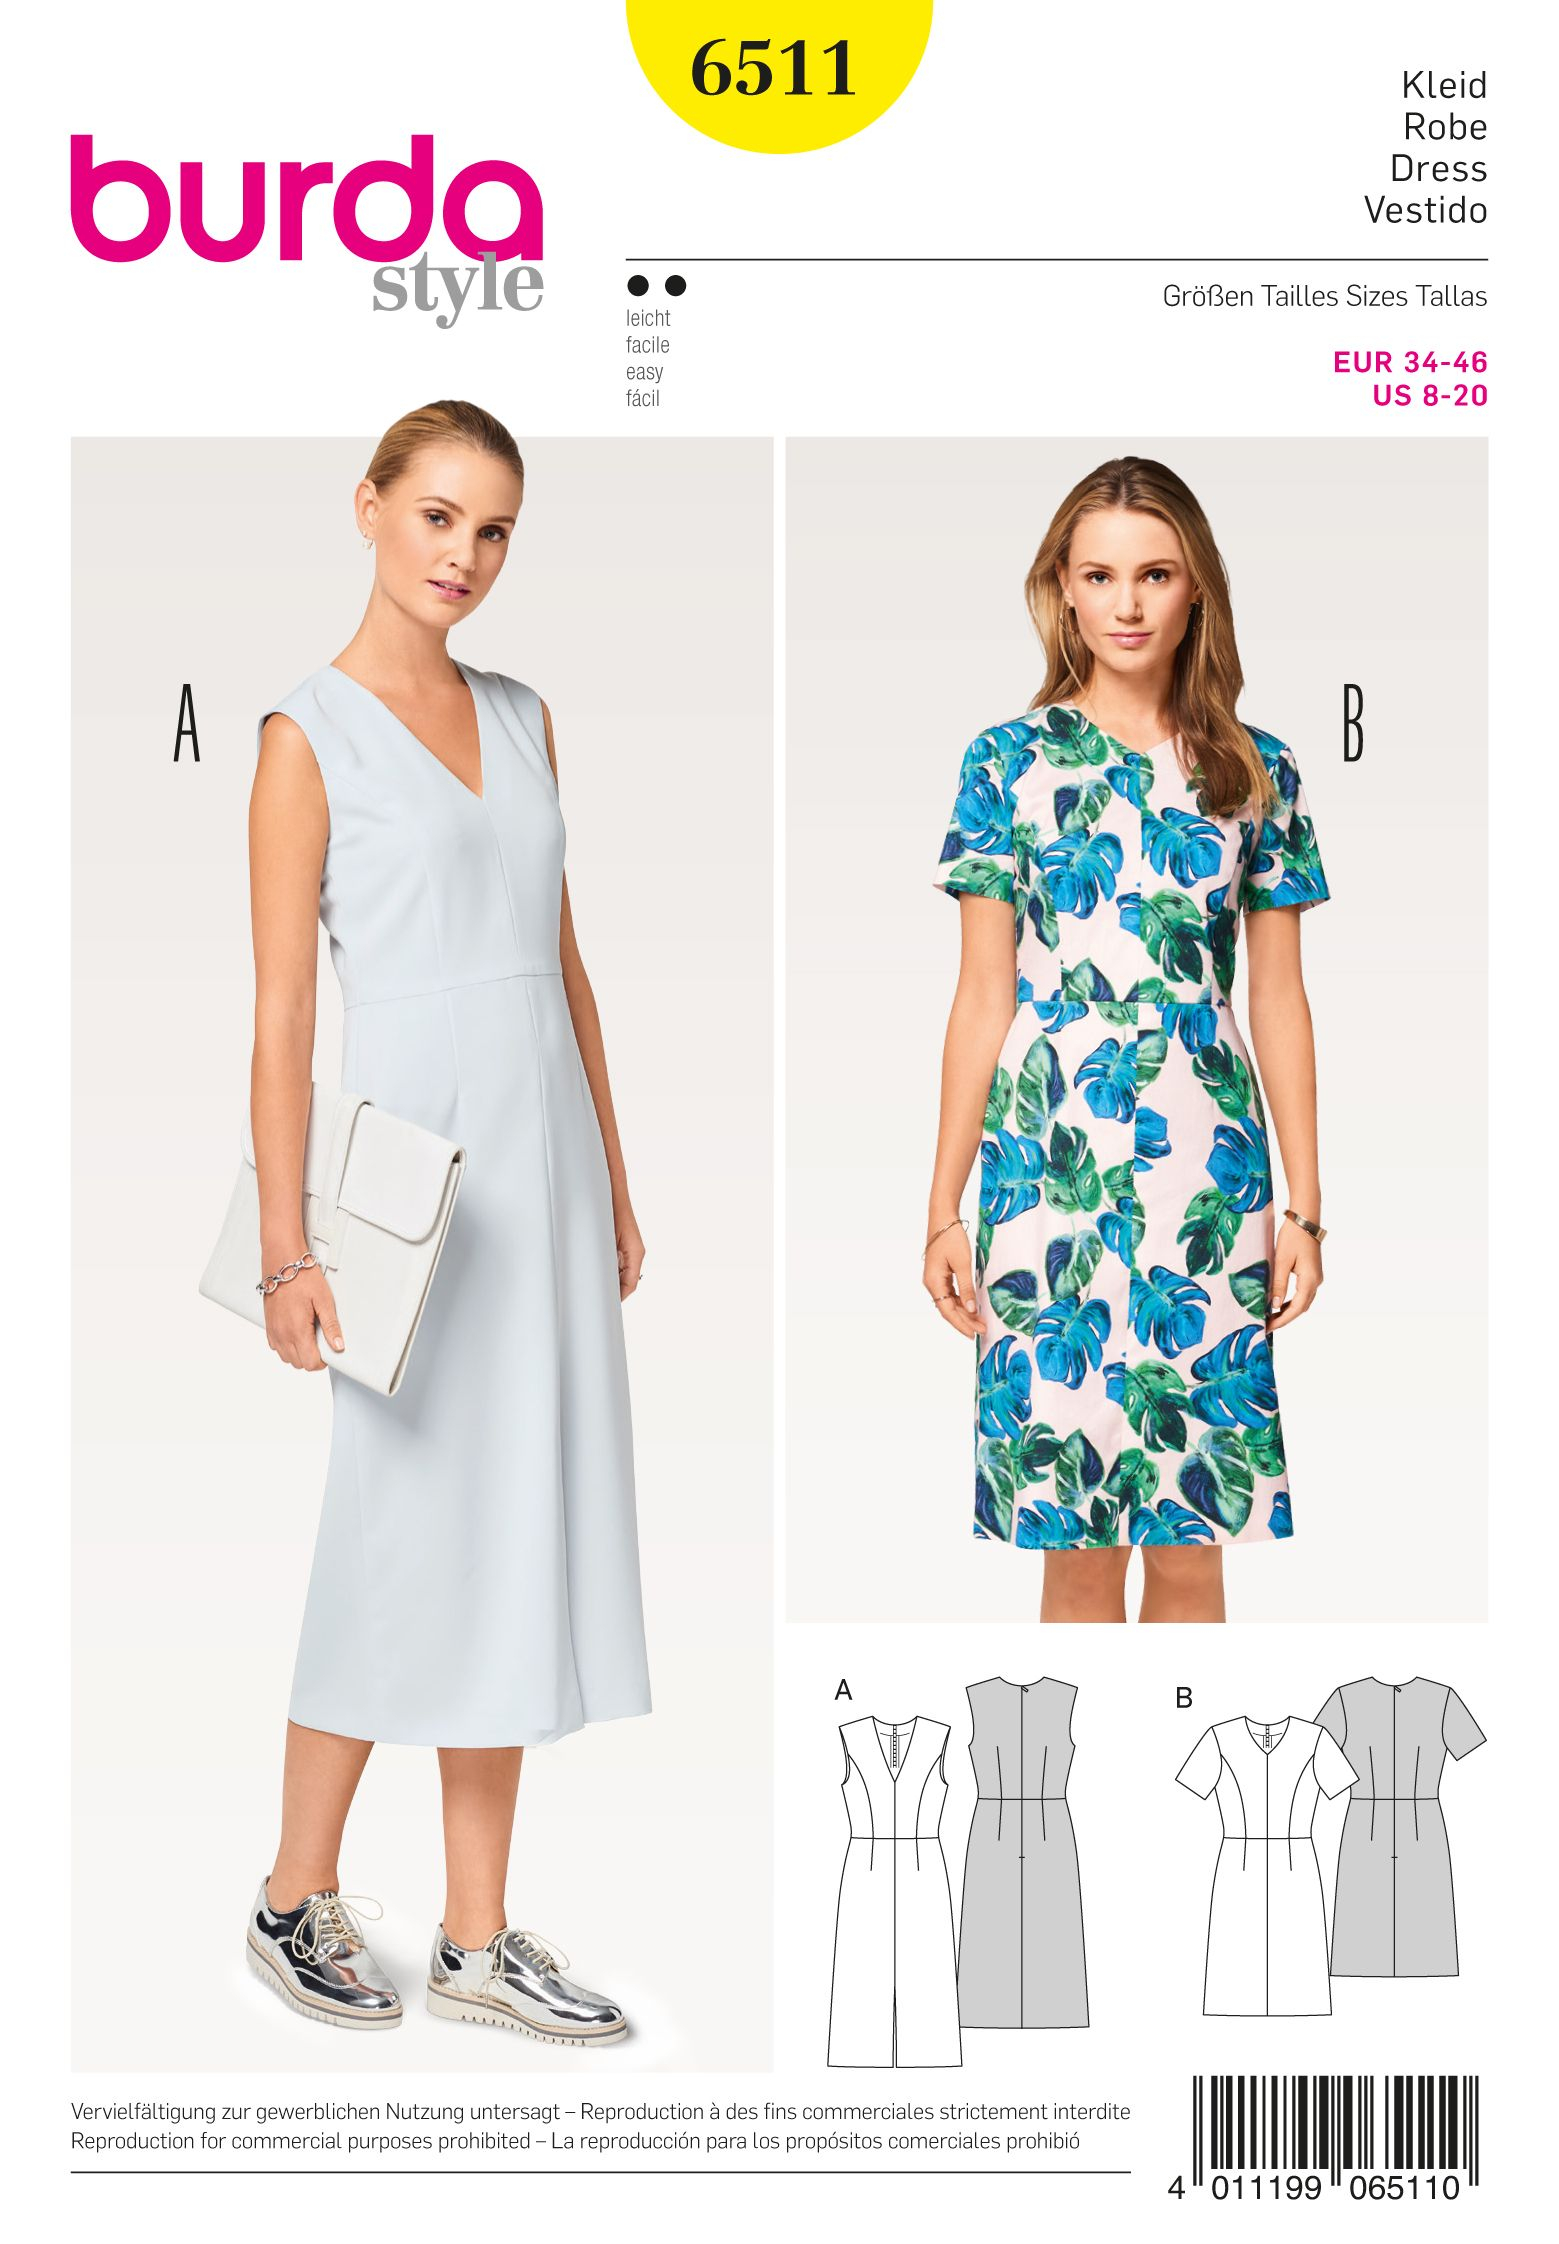 V Neck Dress Sewing Pattern Burda 6511 Misses V Neck Dress Pinterest Dress Sewing Patterns